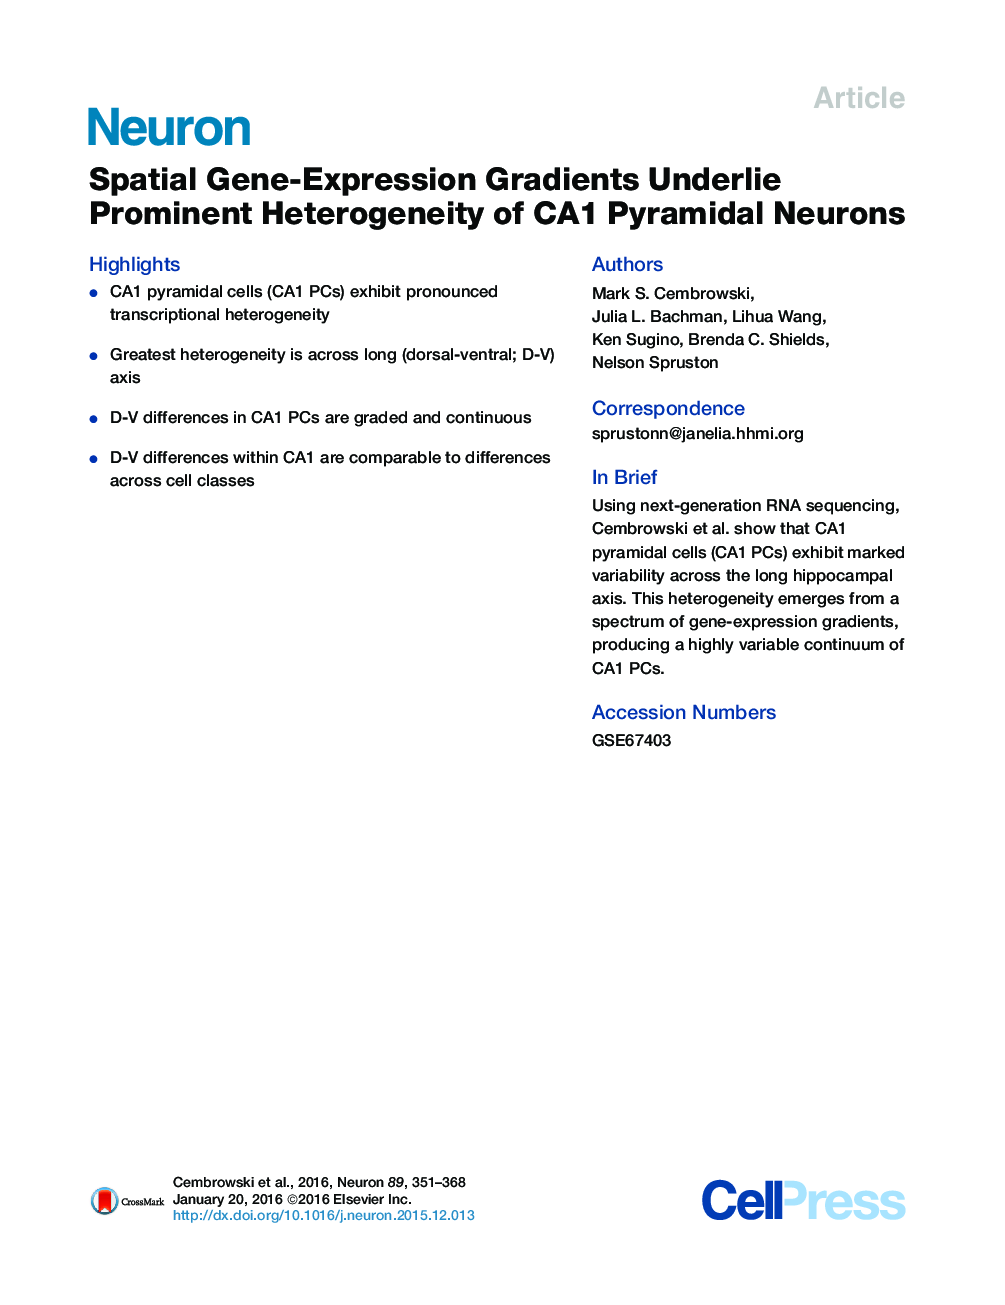 Spatial Gene-Expression Gradients Underlie Prominent Heterogeneity of CA1 Pyramidal Neurons